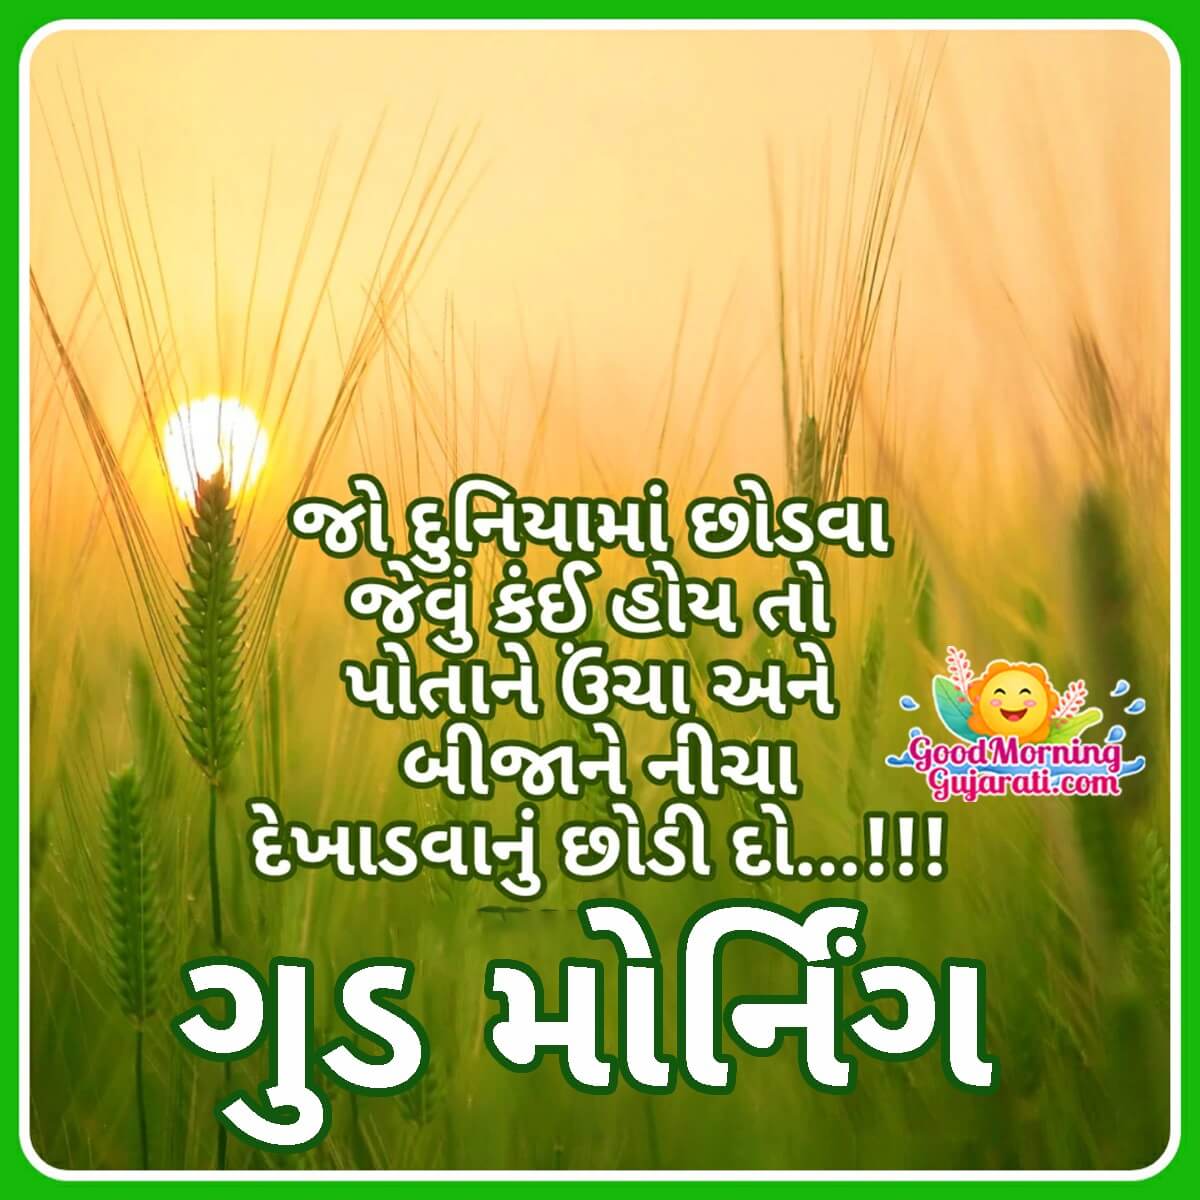 Good Morning Gujarati Quote Image